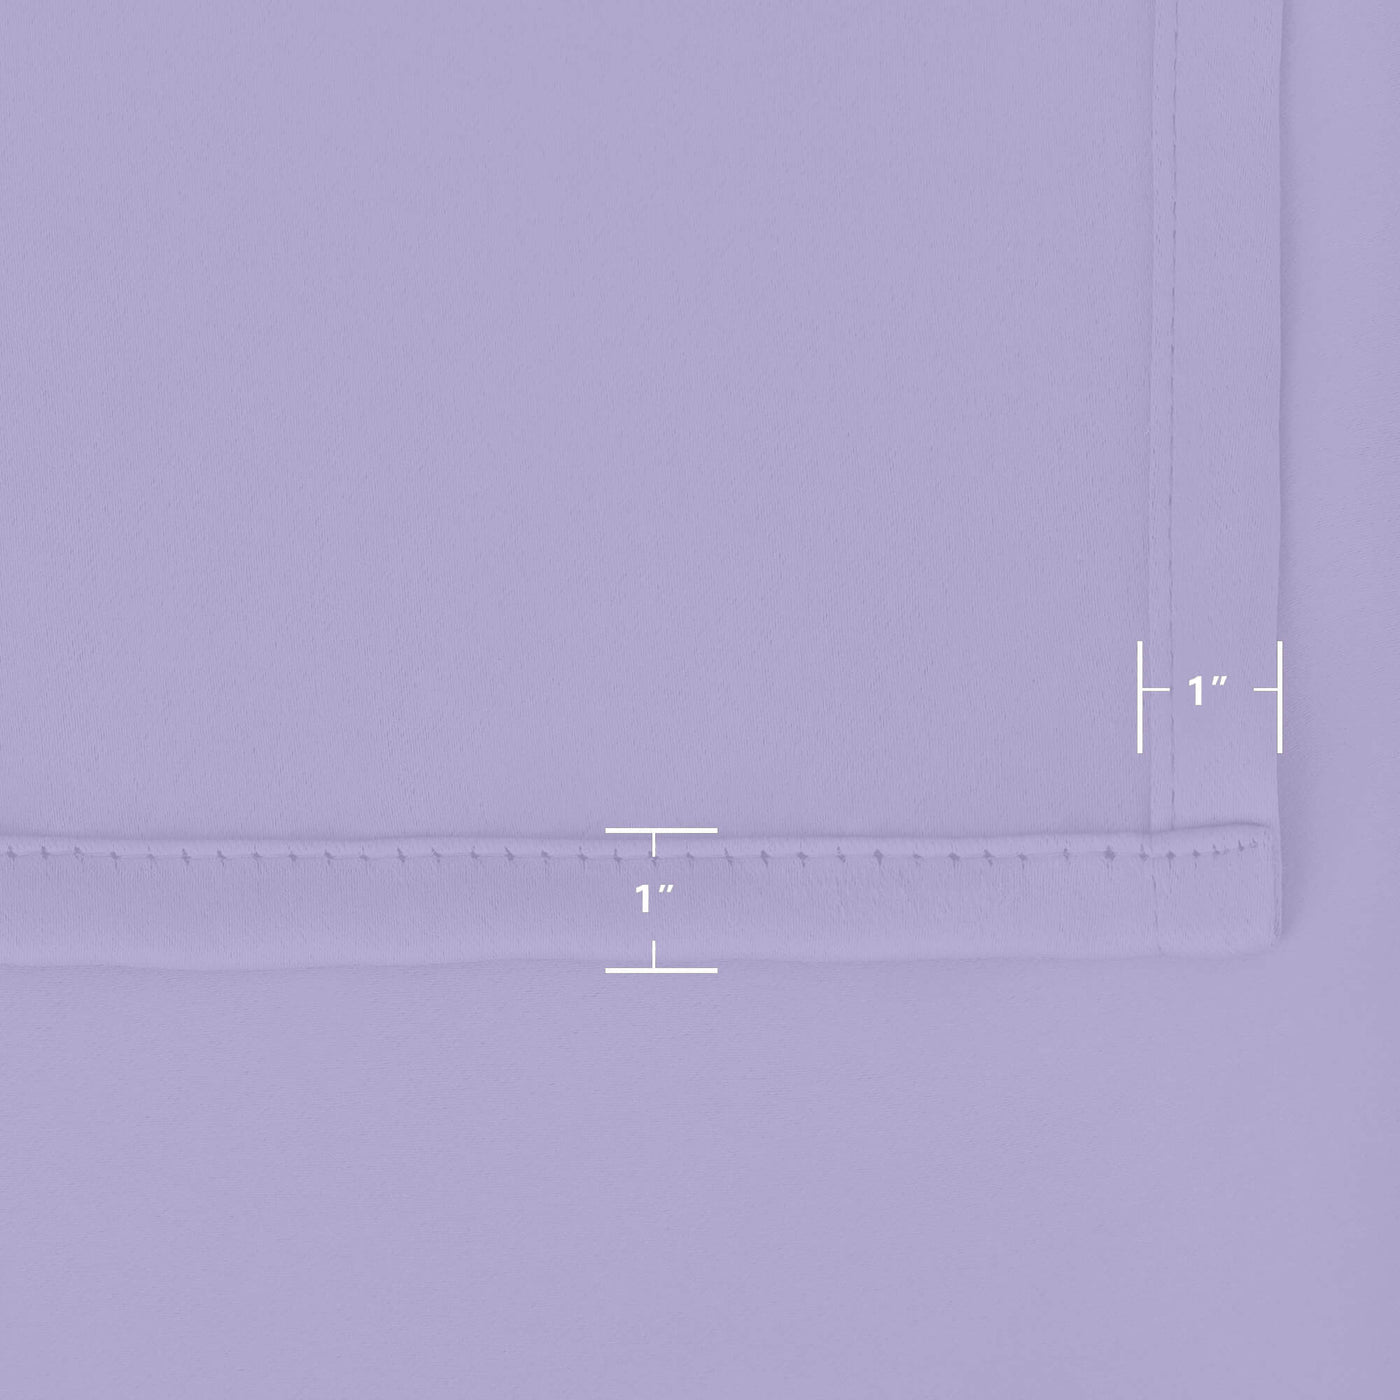 Outdoor Curtains Waterproof Grommet Top 1 Panel - Purple